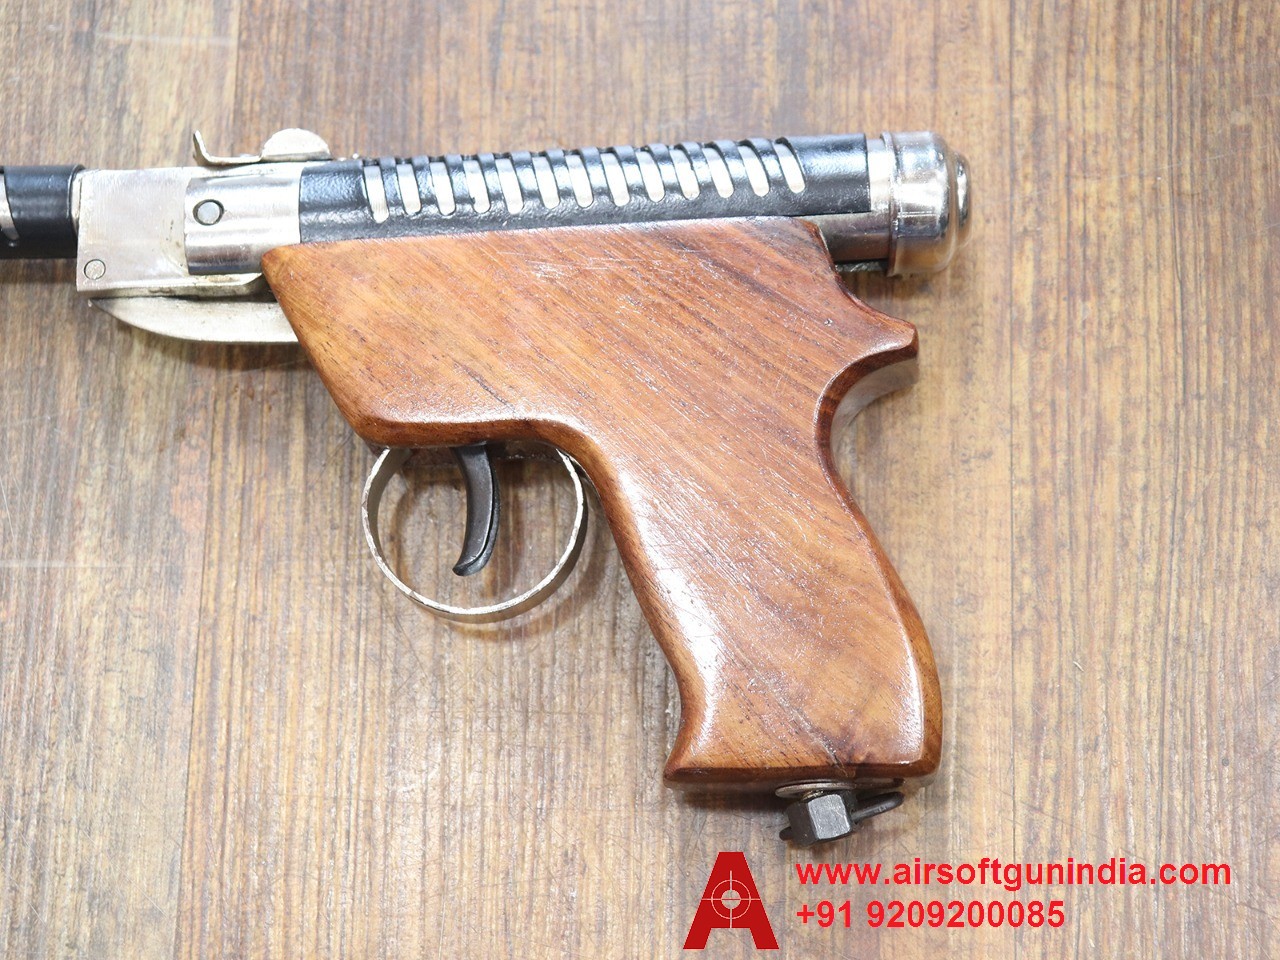 Batman 007 Wooden Single-shot .177 Caliber / 4.5 Mm Indian Air Pistol By Airsoft Gun India